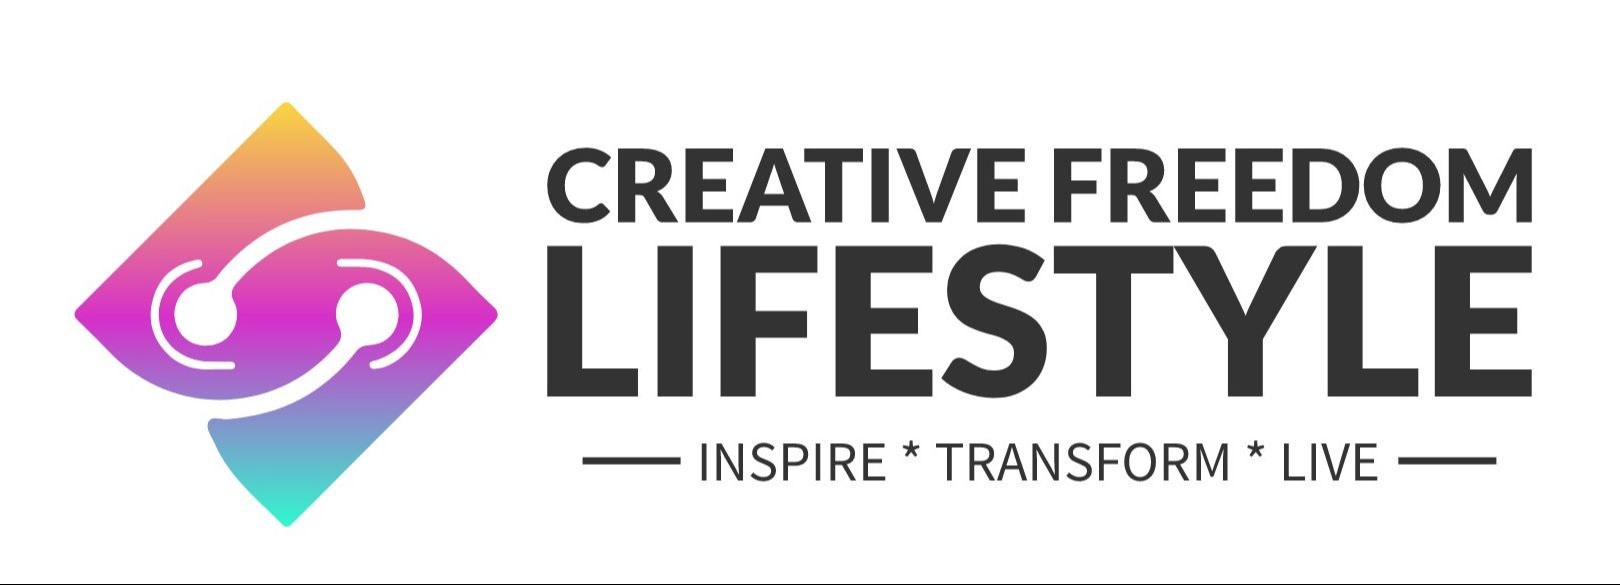 Creative Freedom Lifestyle Main Logo 2400x1800-crop